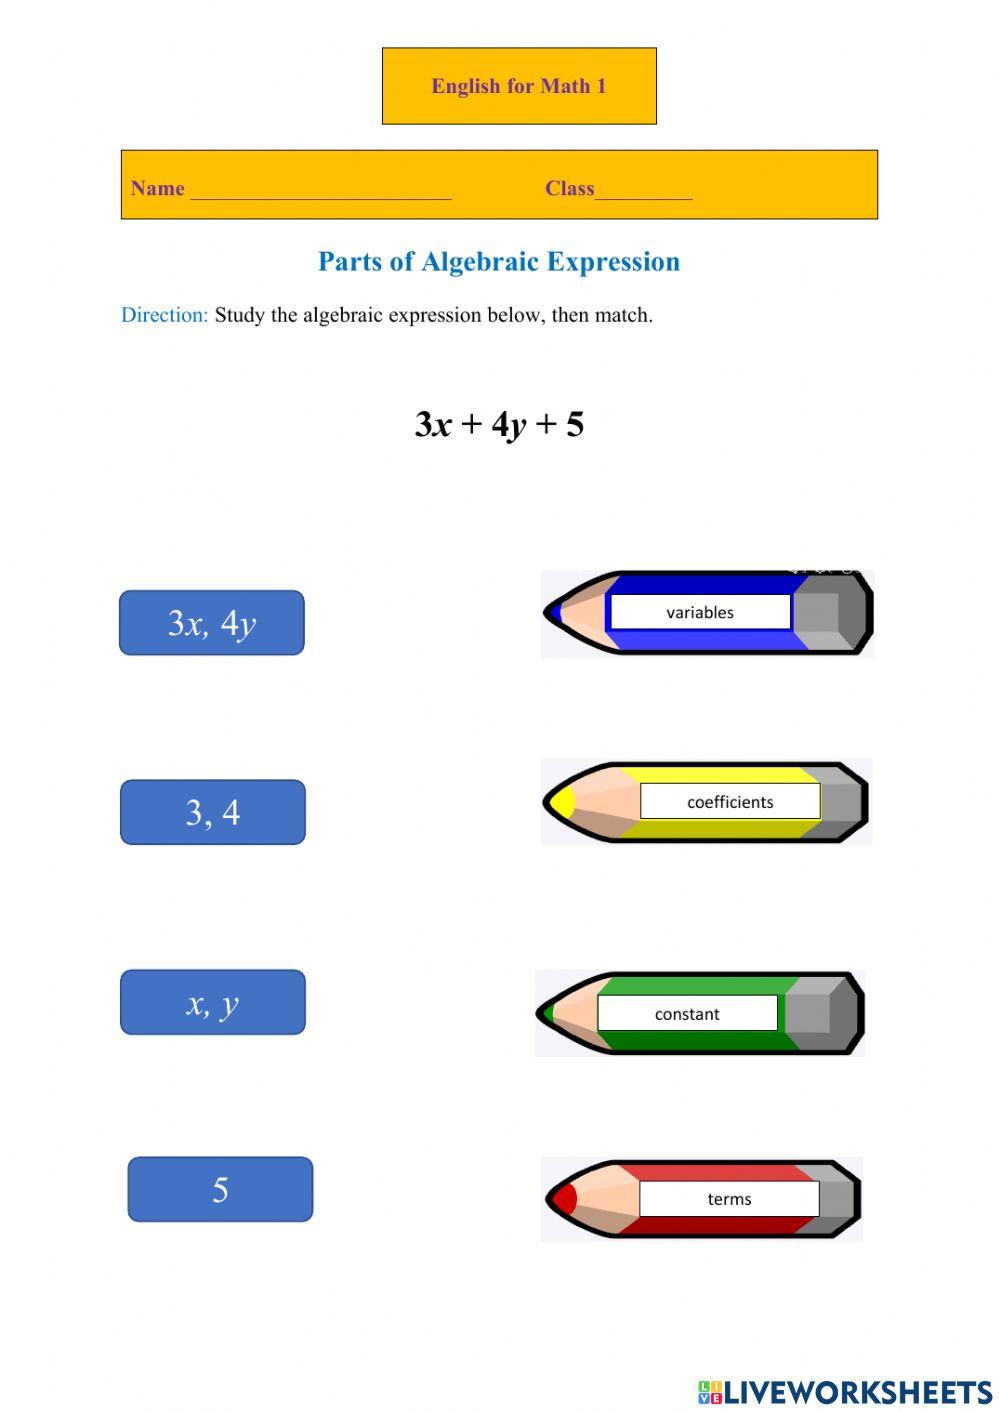 Parts of Algebraic Expression